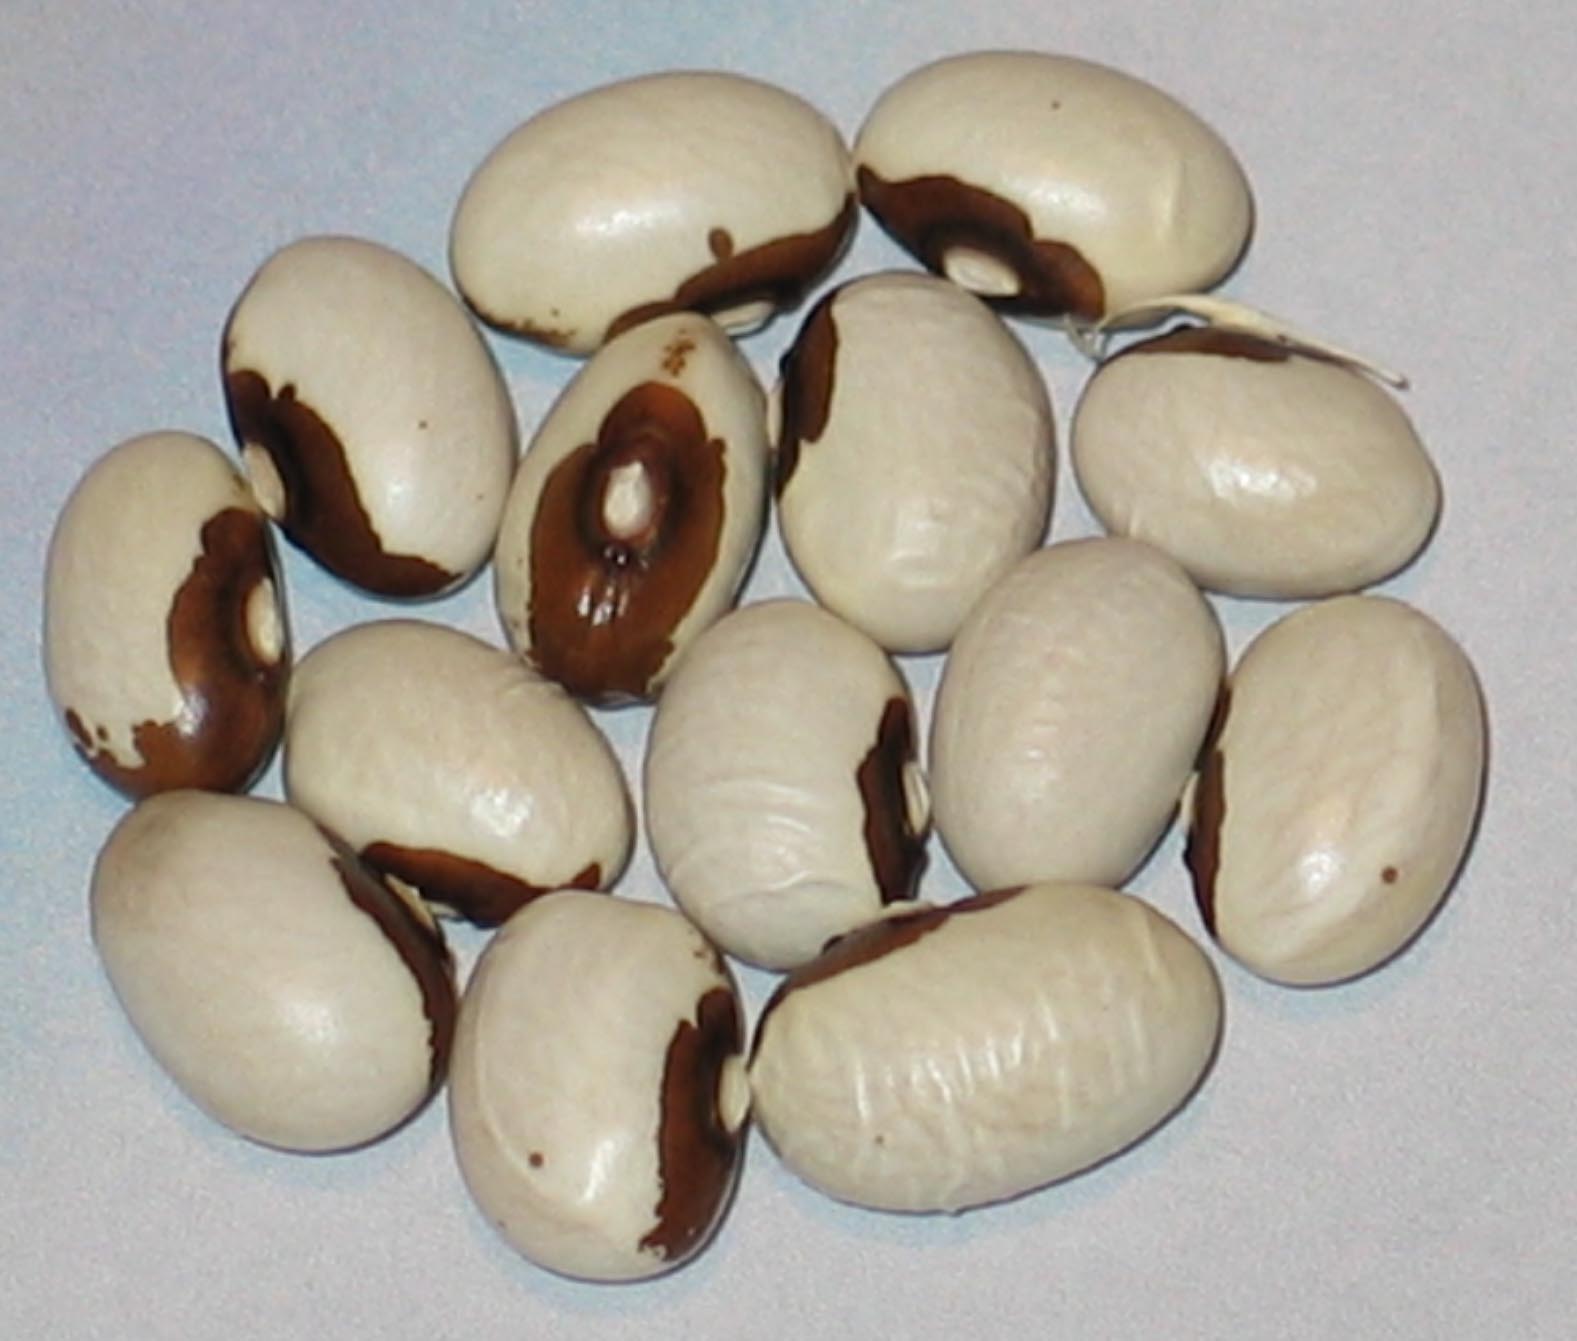 image of Nasieddu Marrone beans